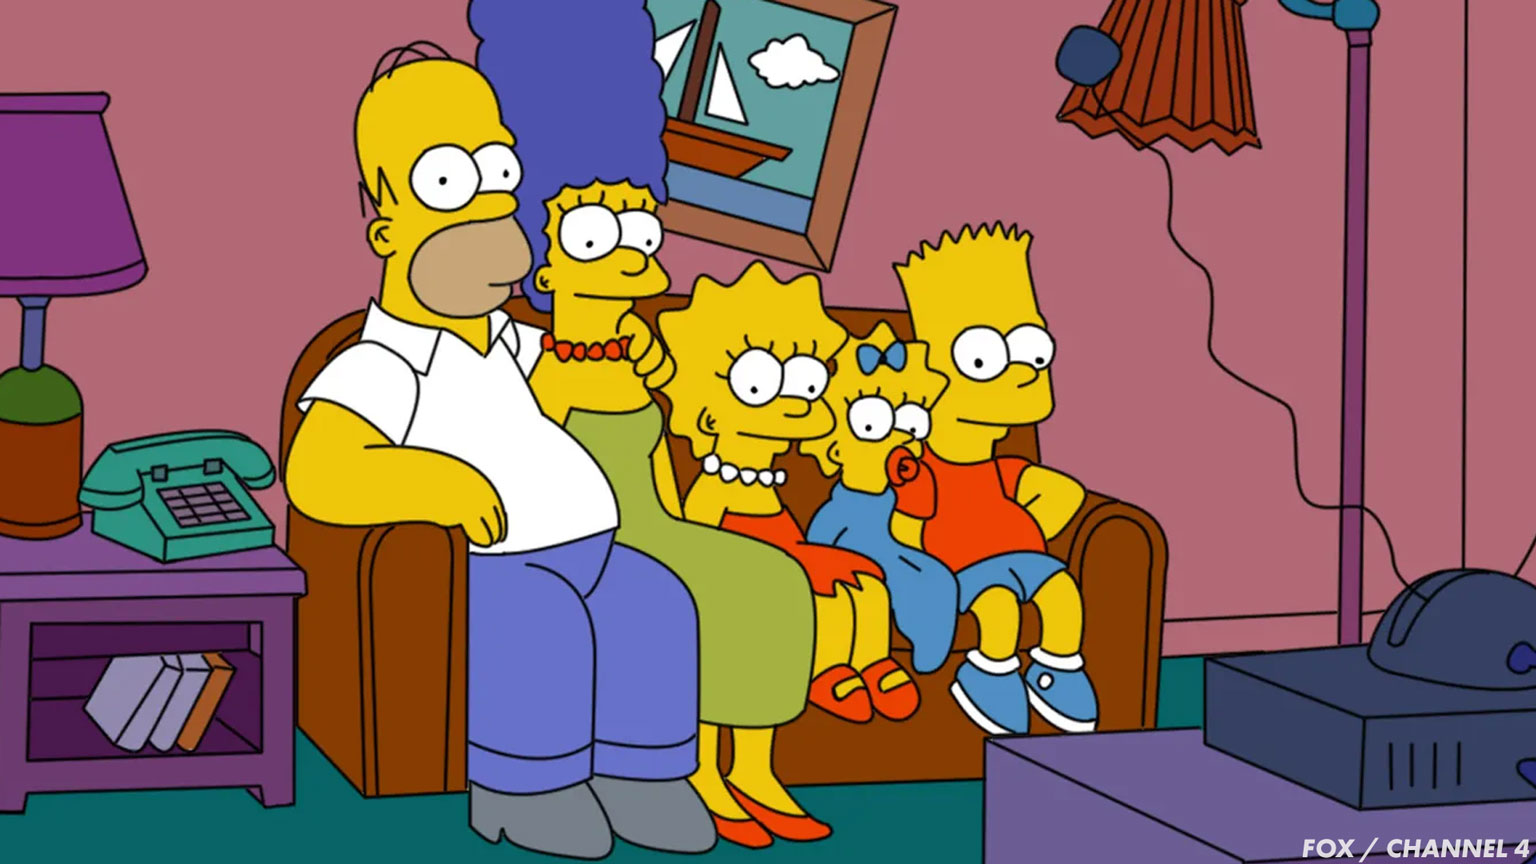 Matt Groening Explains Why He Made The Simpsons Yellow | TOTUM